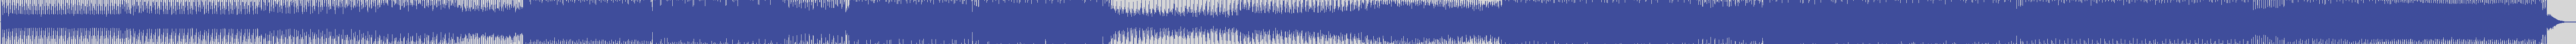 atomic_recordings [AR016] Alex Di Stefano - Binary404 [Original Mix] audio wave form